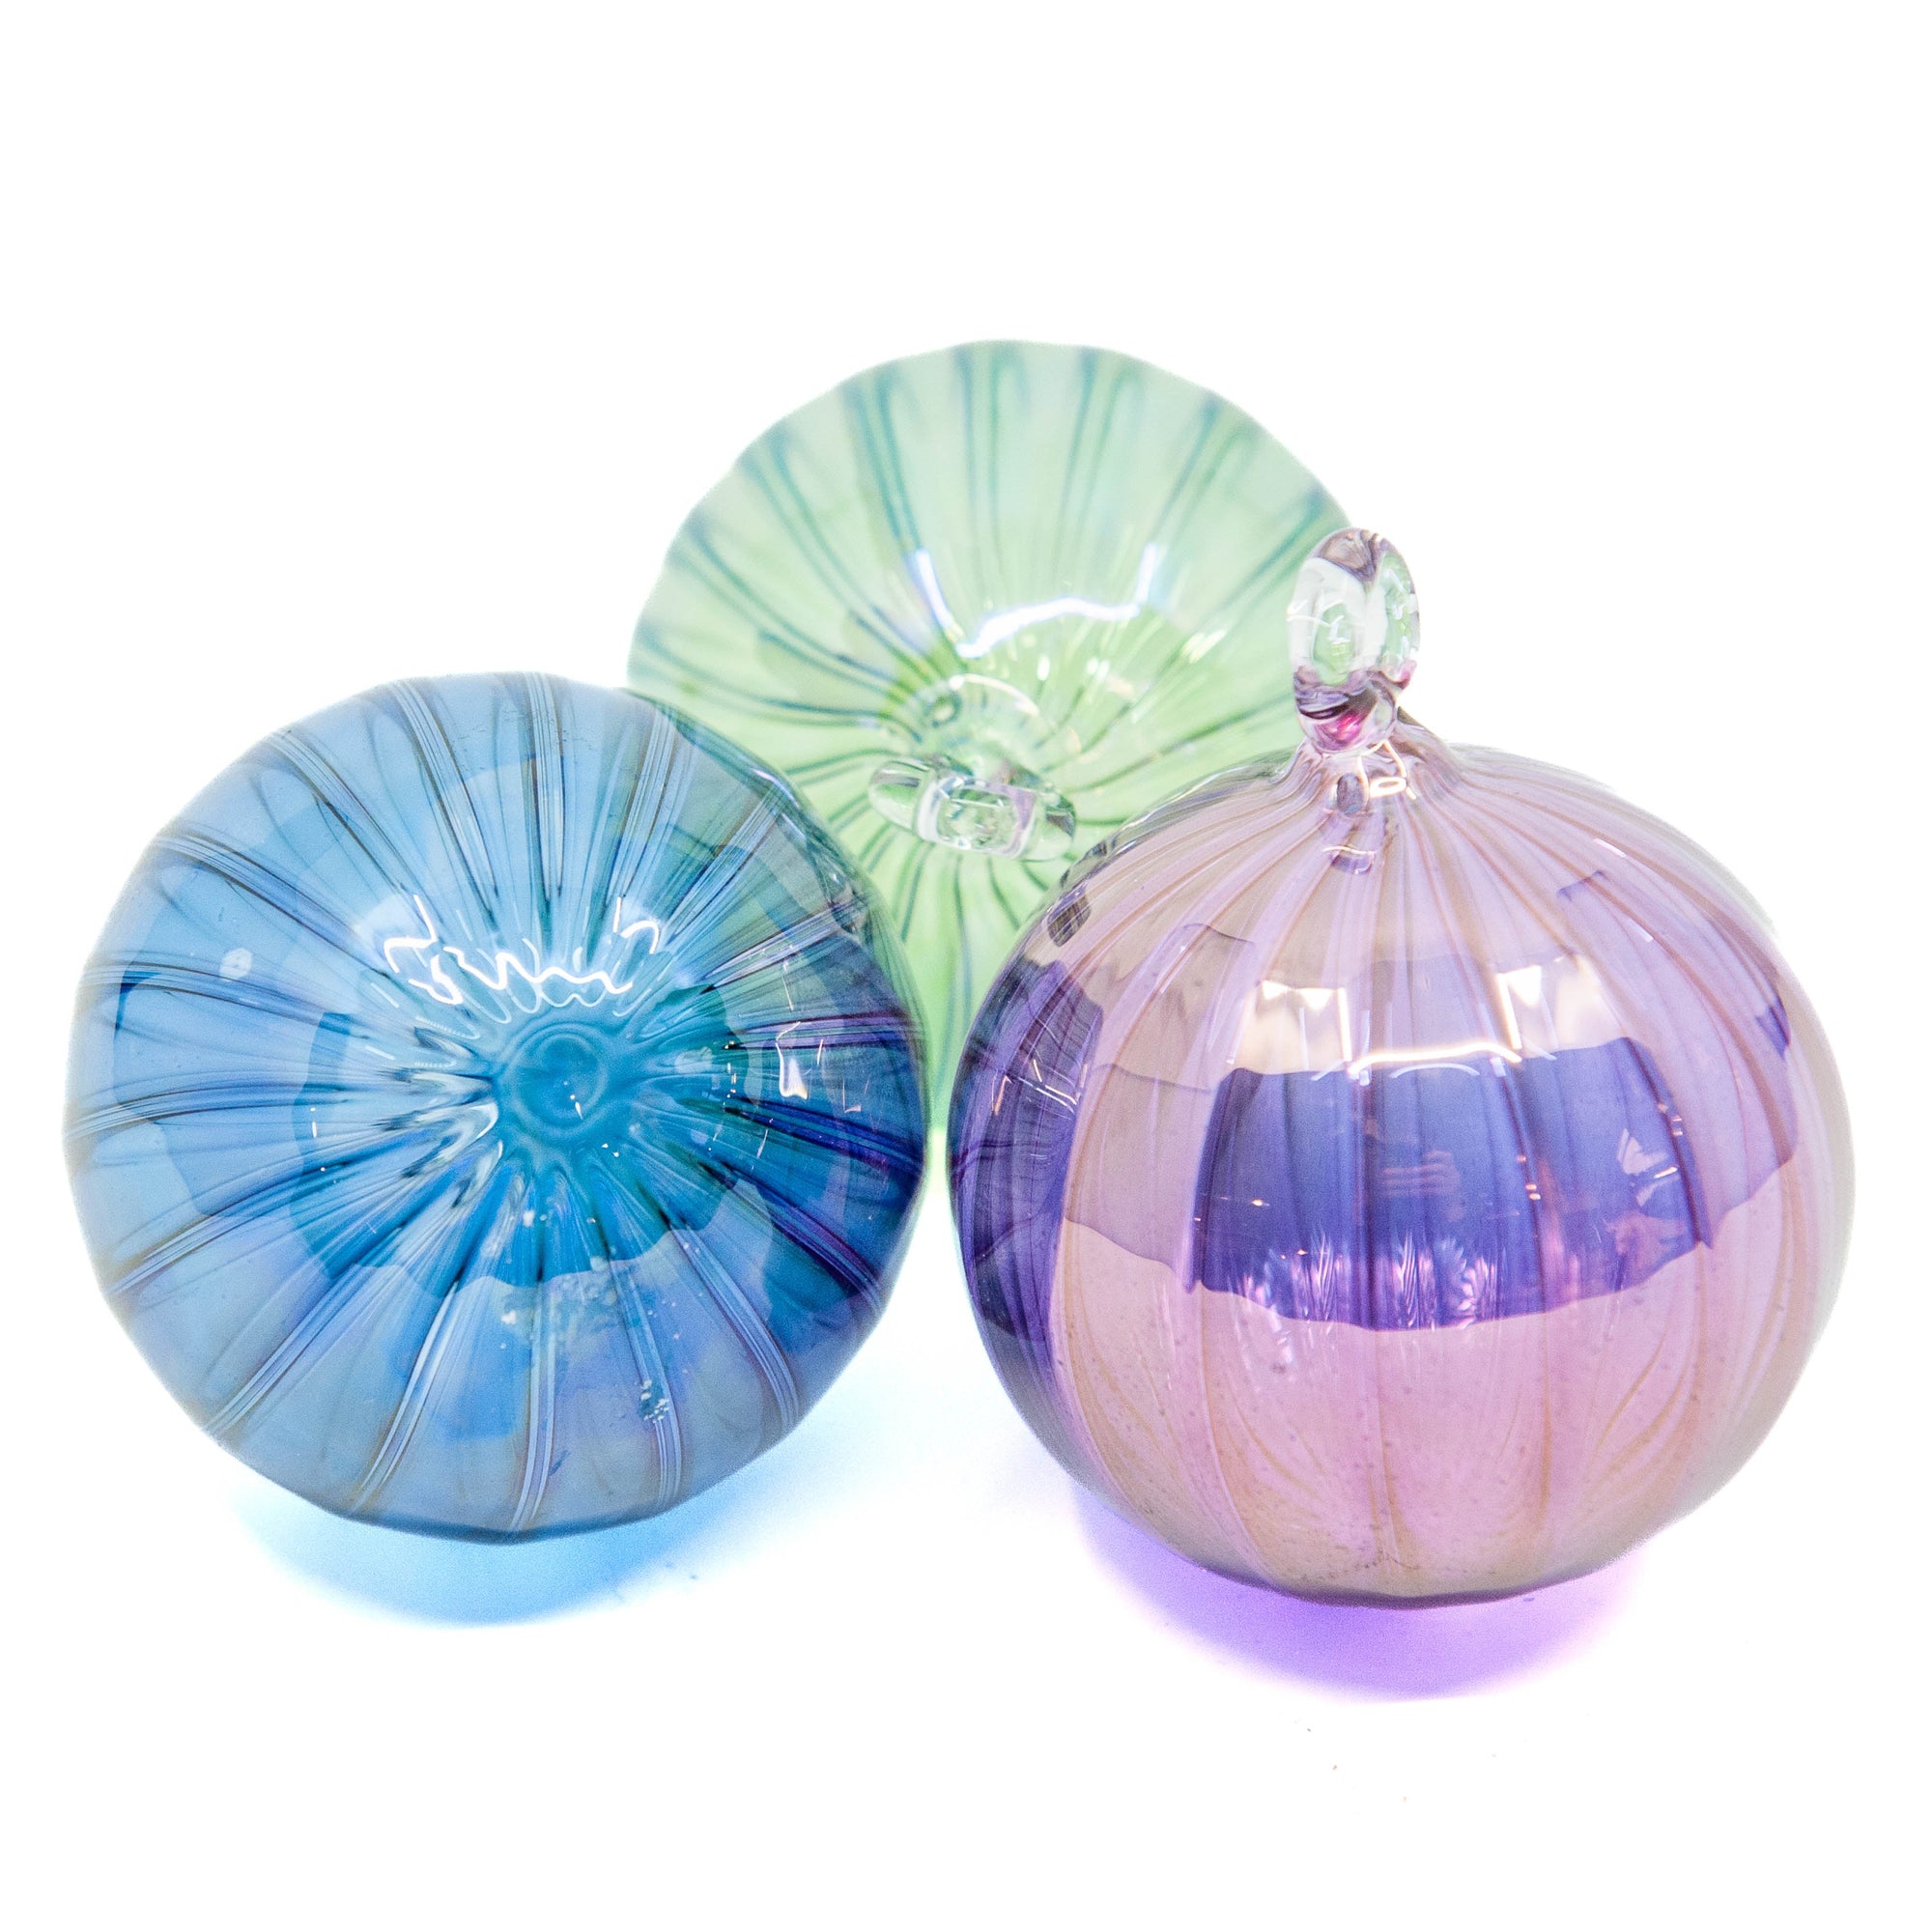 Egyptian Starburst Ball Glass Ornaments